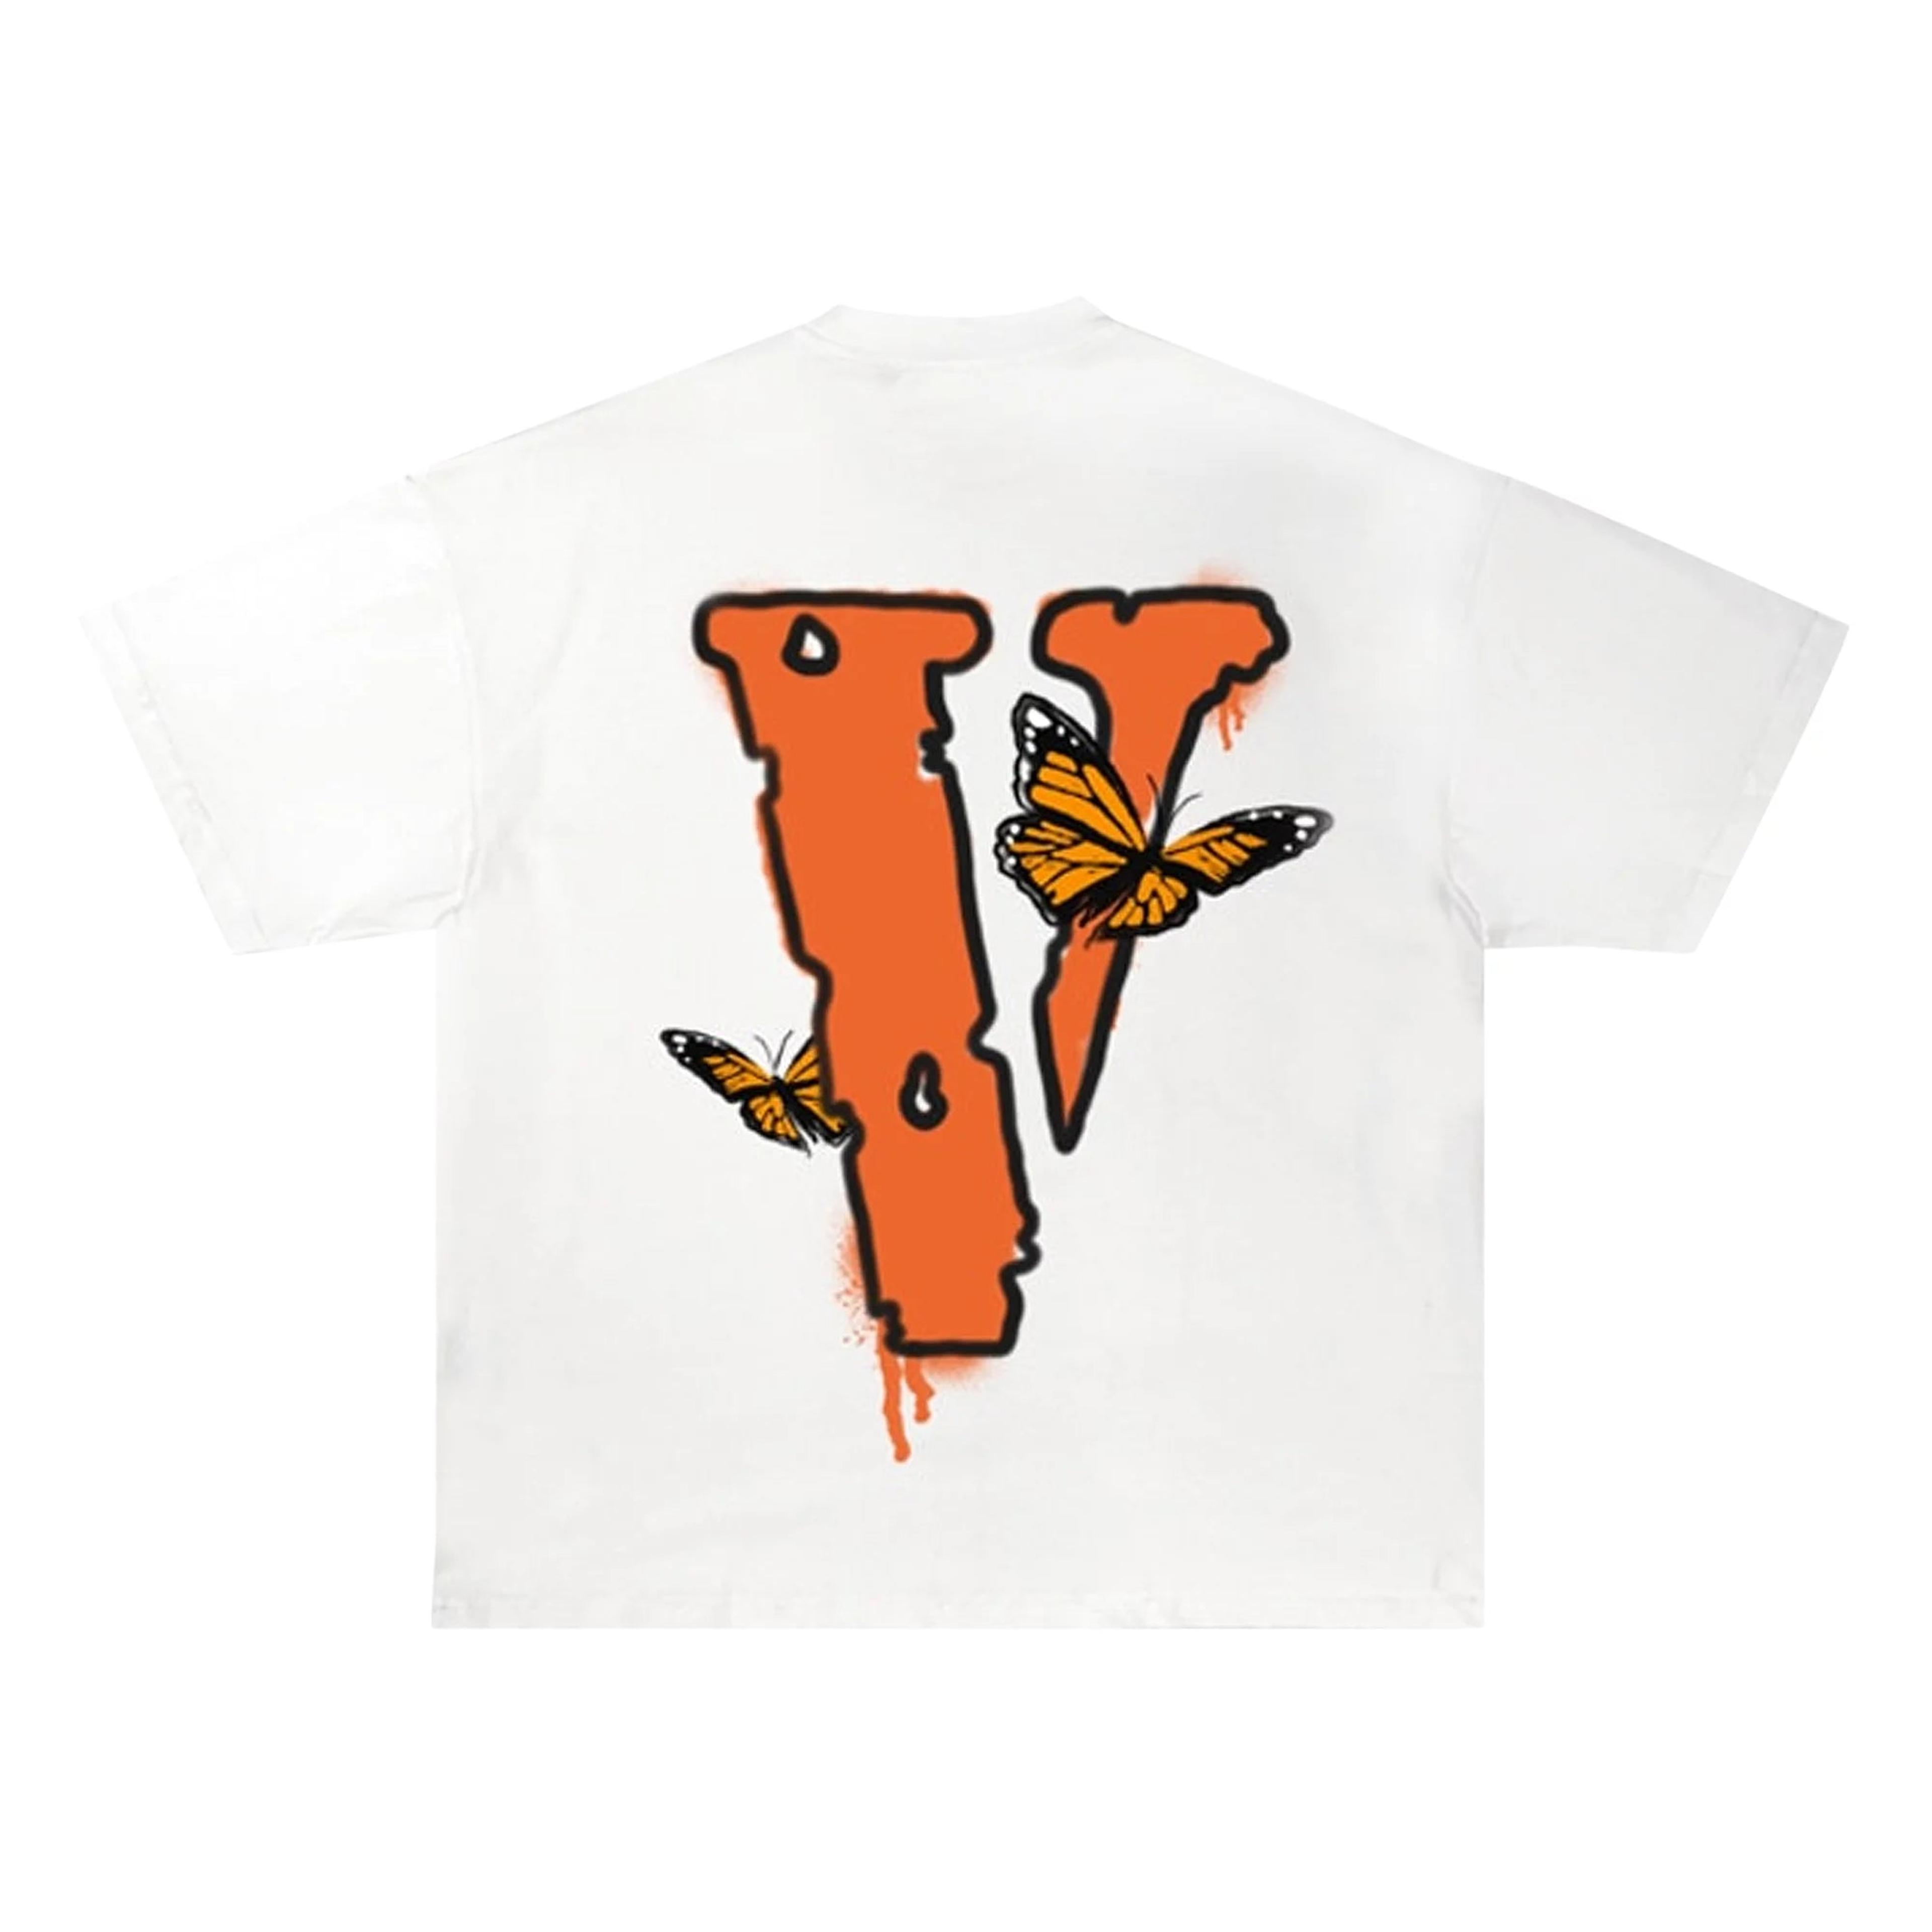 Alternate View 1 of Juice Wrld x Vlone 'Butterfly' T-Shirt